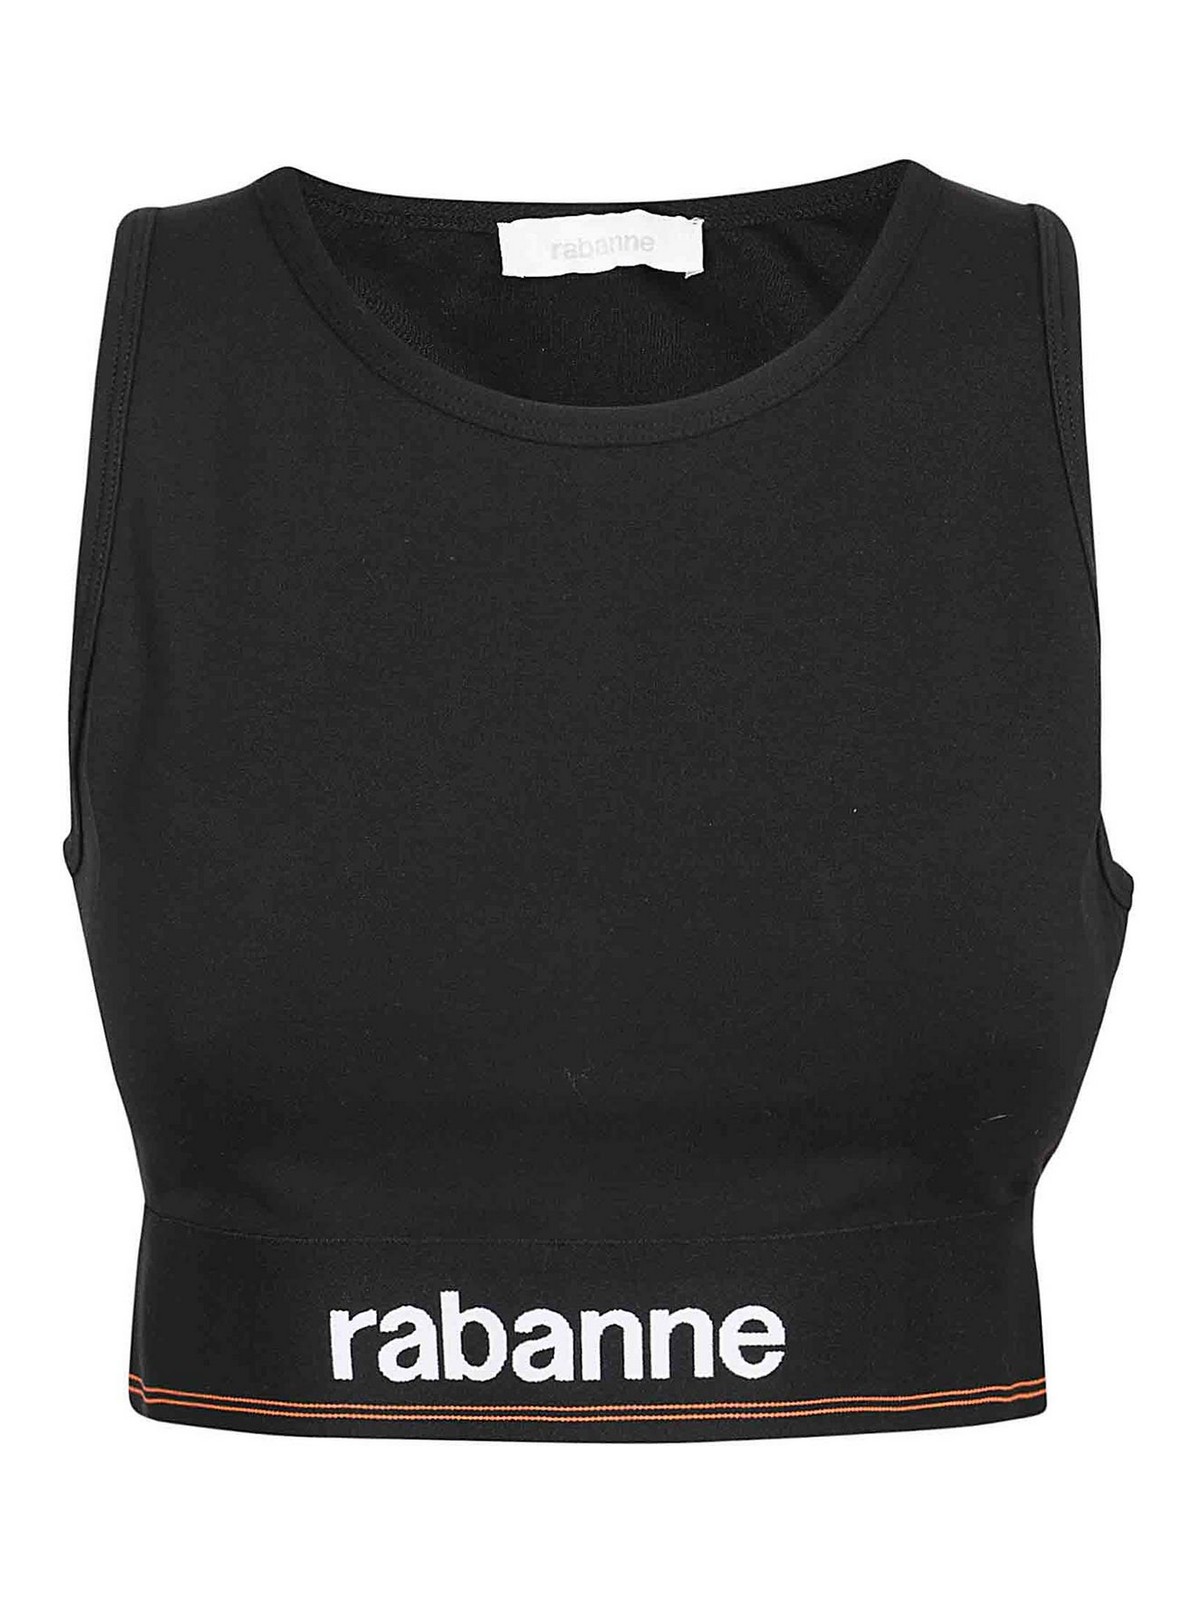 Rabanne Top In Black